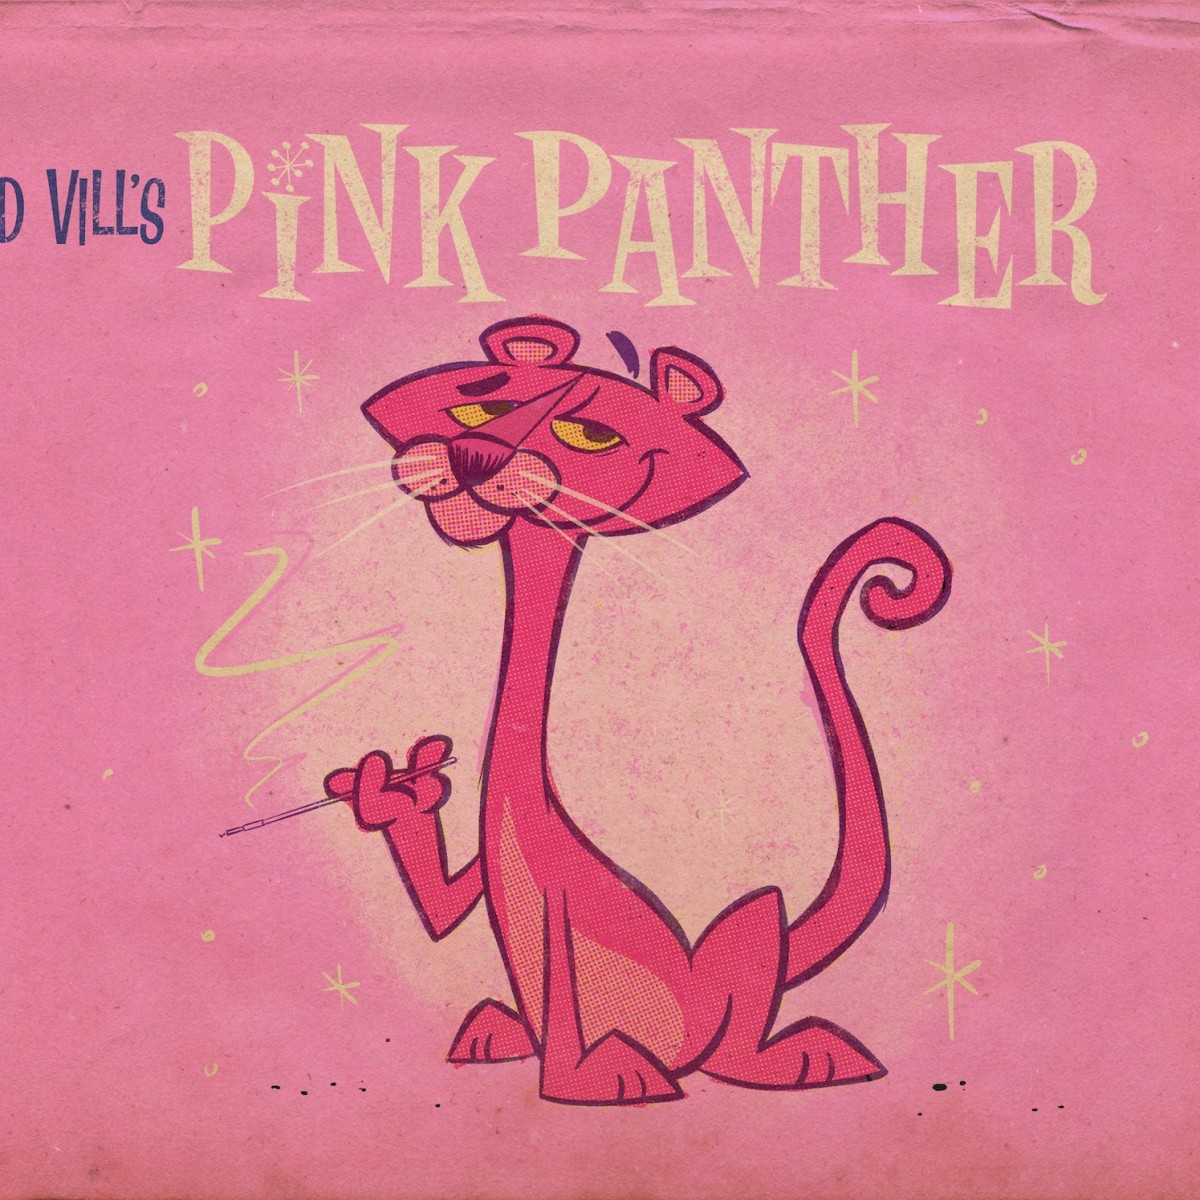 Ed Vill's Pink Panther Fan Art